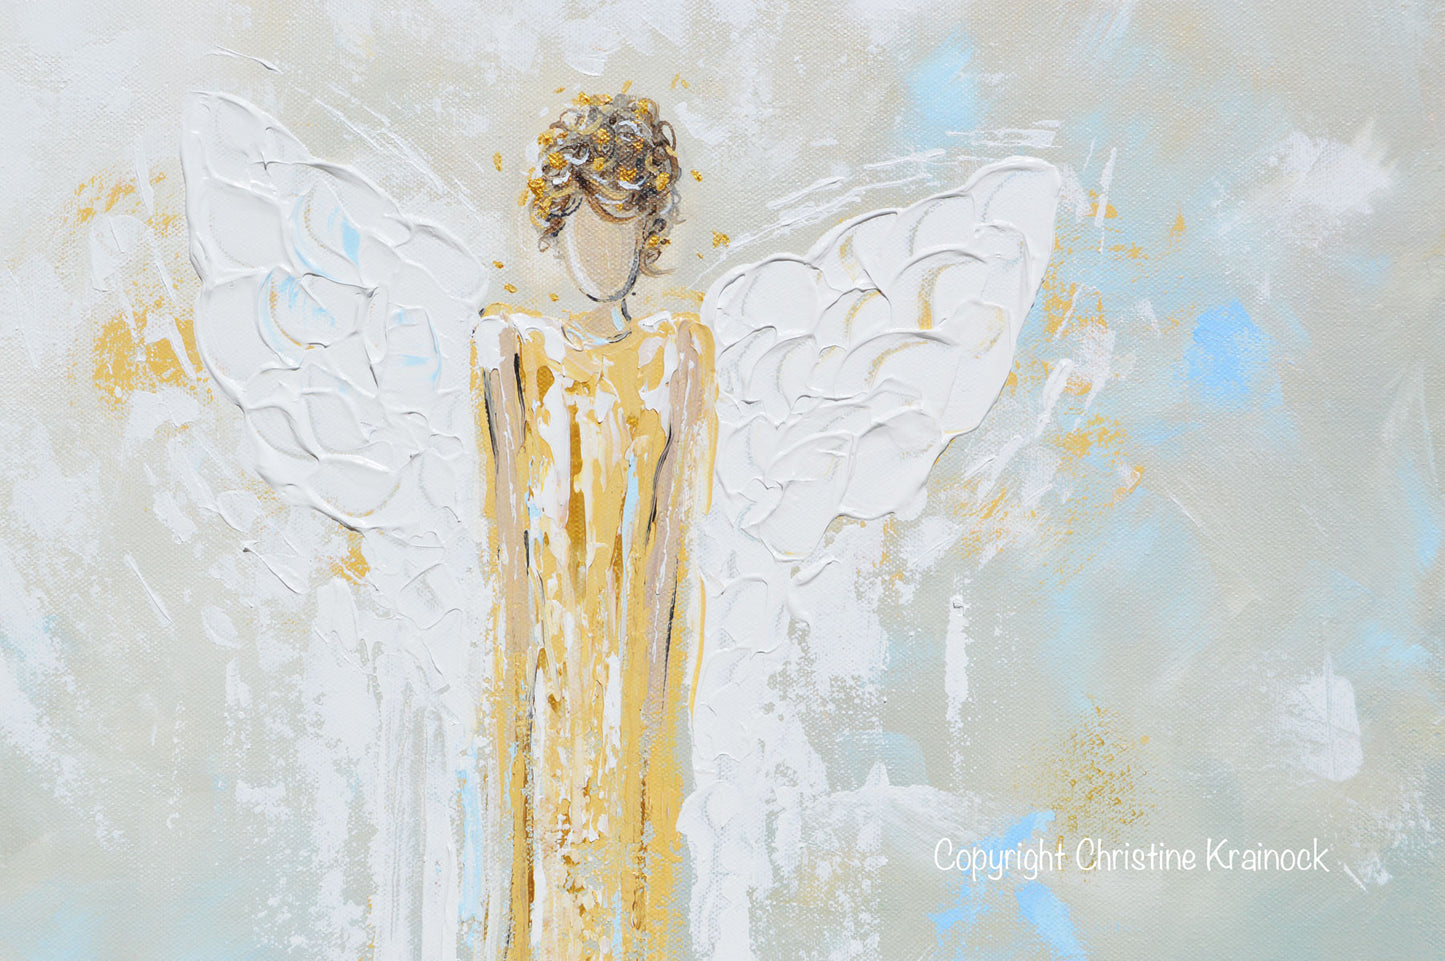  Sense Canvas Gold Angel Wings Canvas Art - Modern